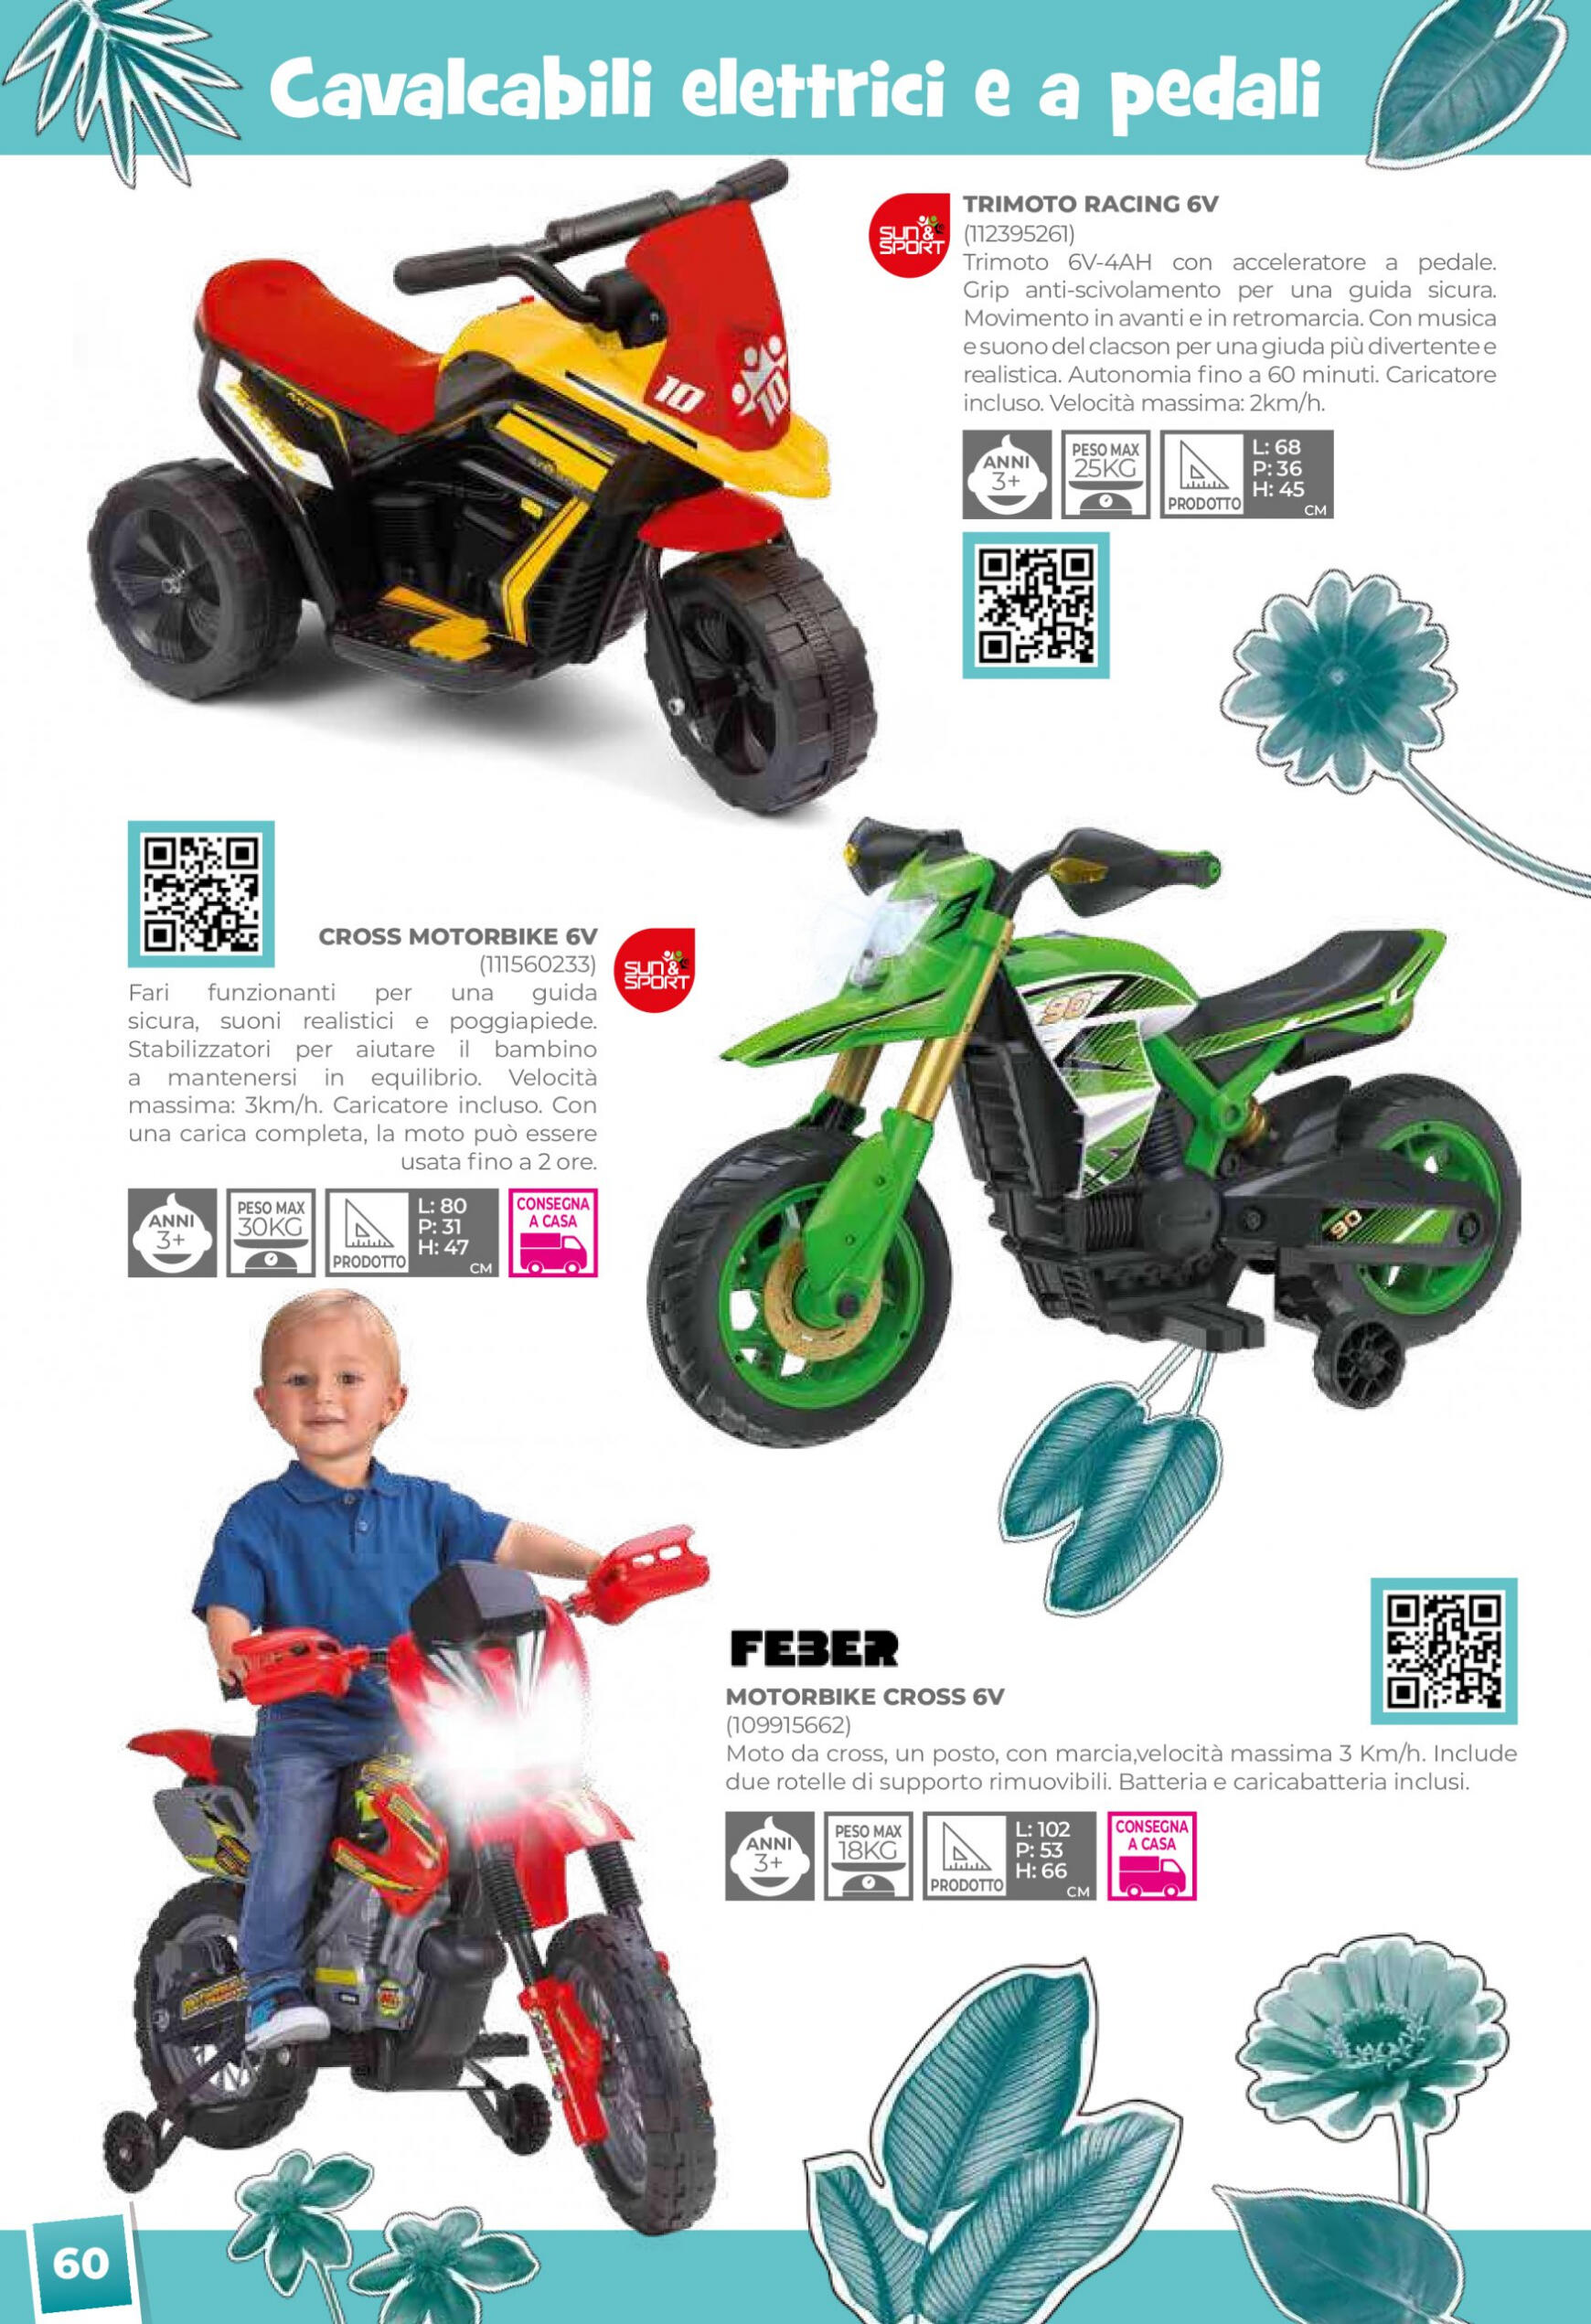 toys-center - Nuovo volantino Toys Center 01.05. - 31.12. - page: 62